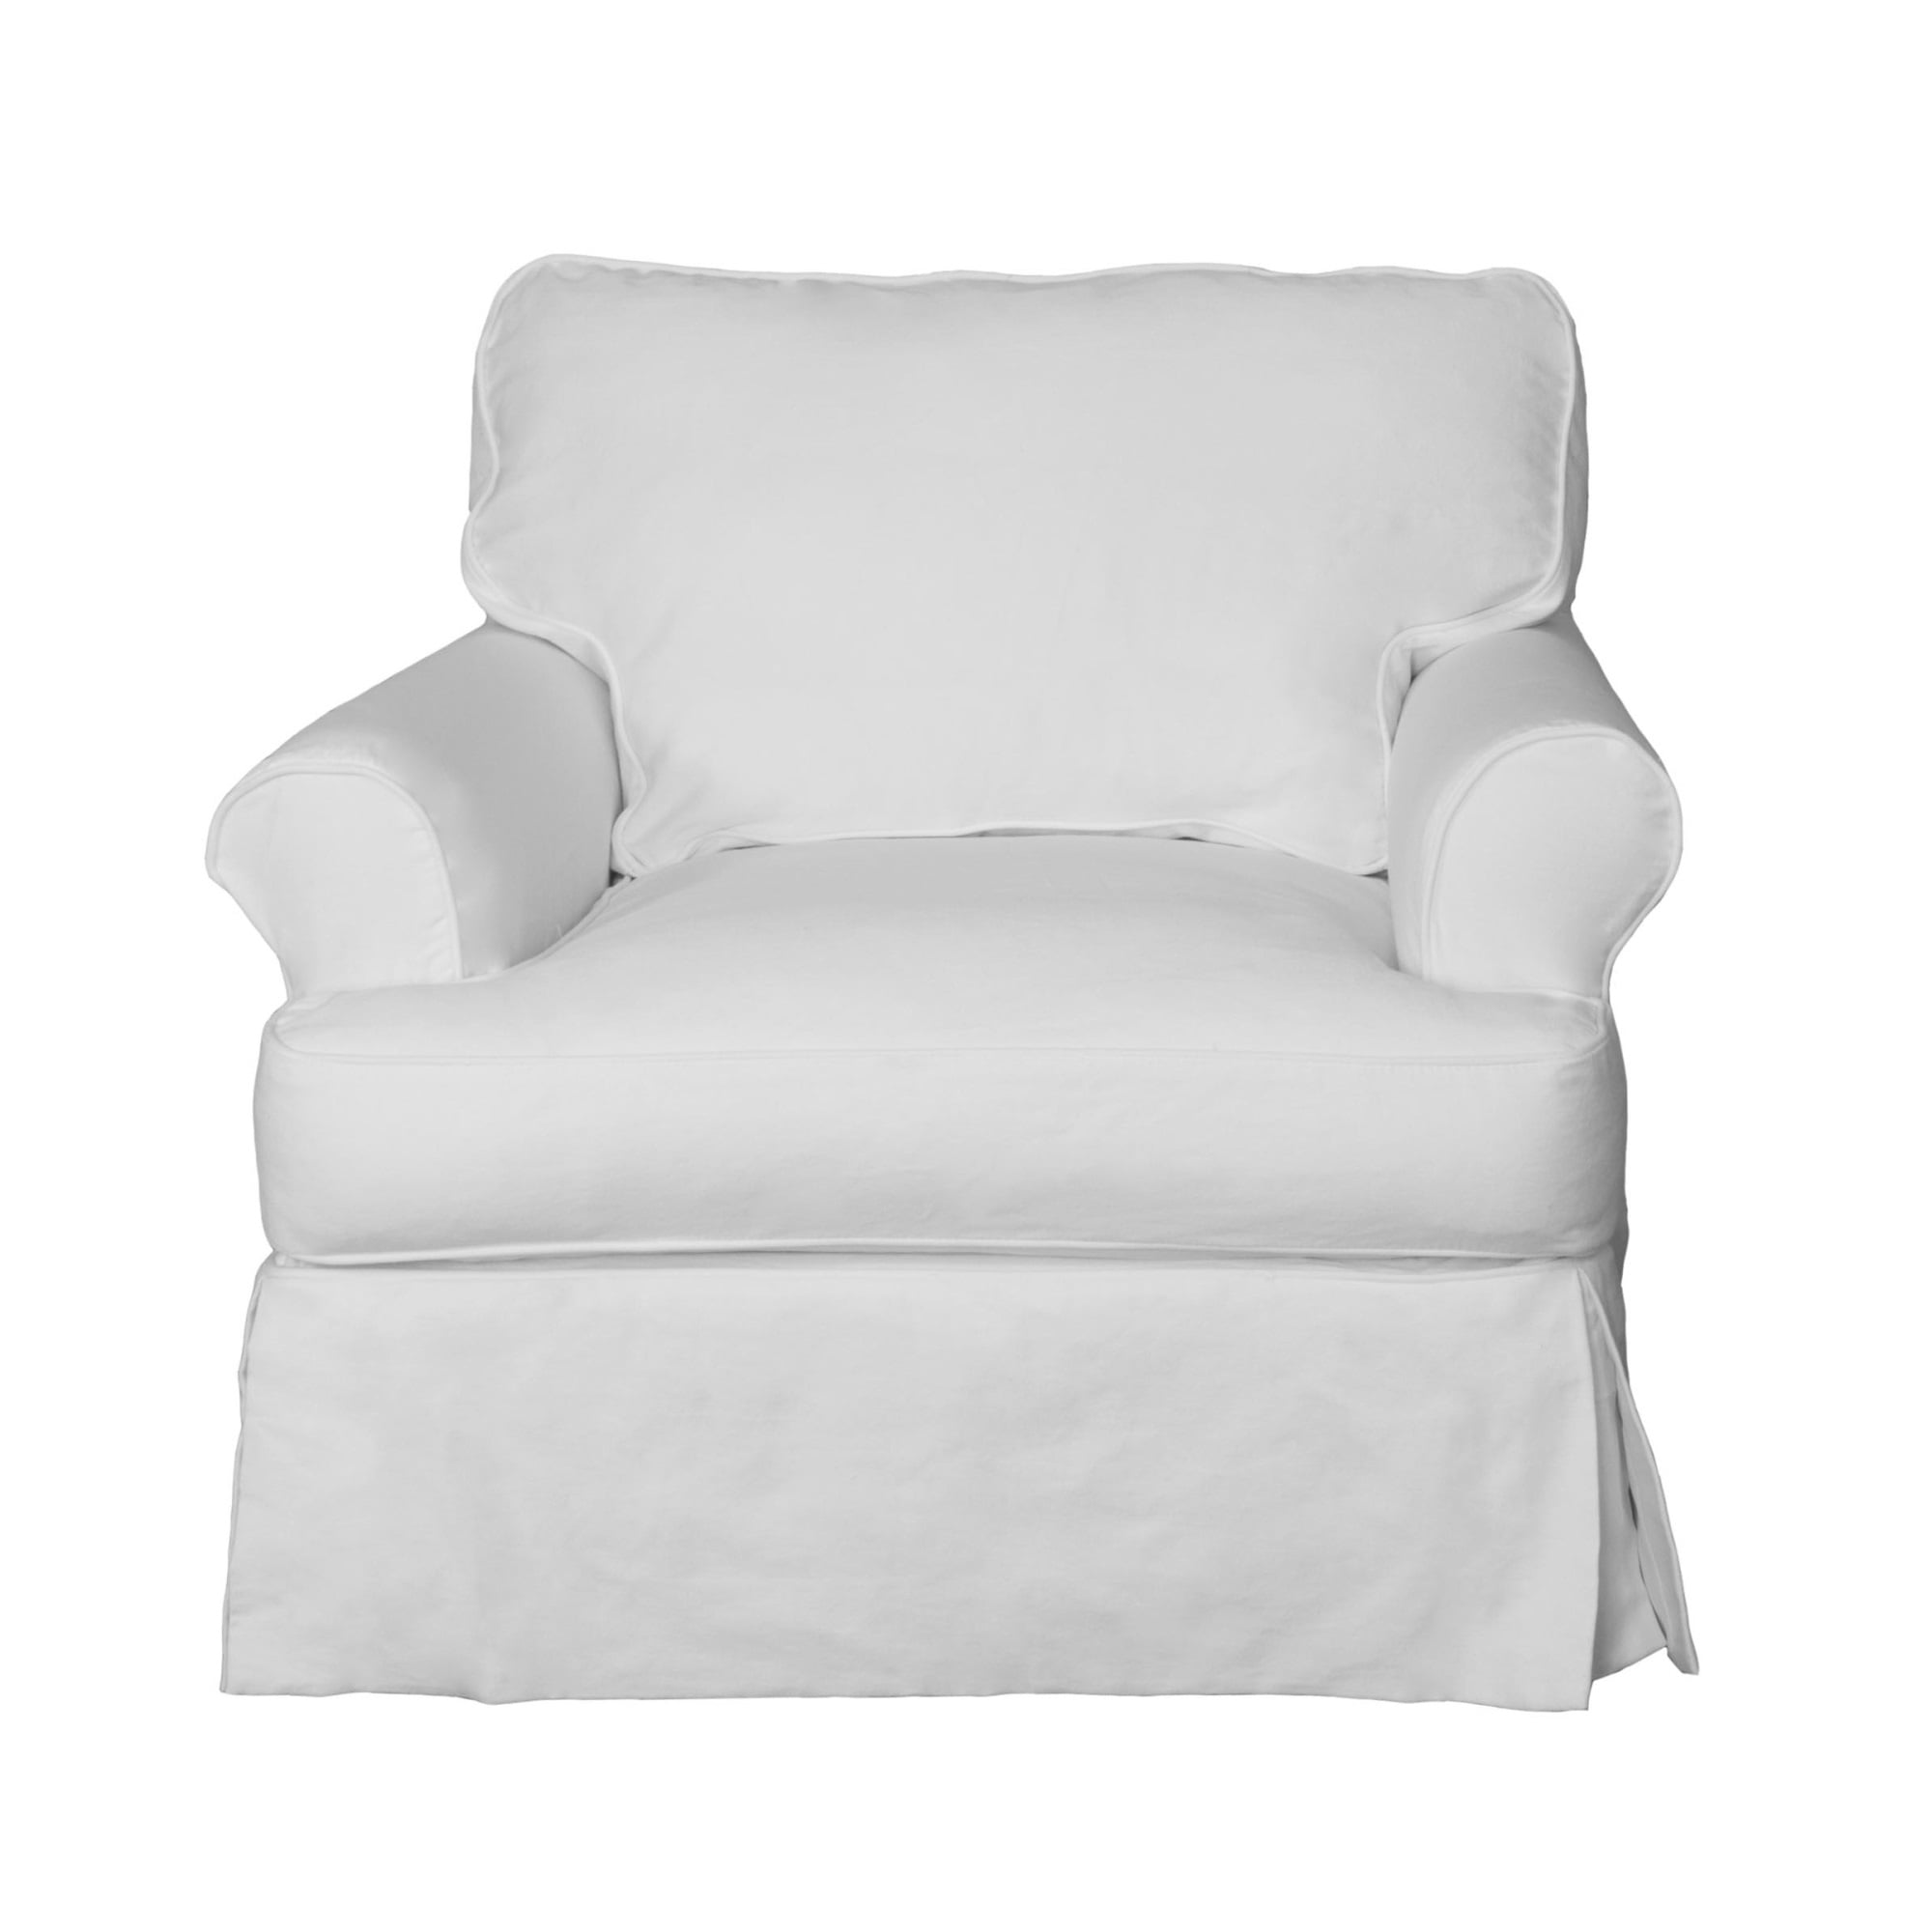 ID 3742744 T-Cushion Chair Slipcover Performance Fabric White 